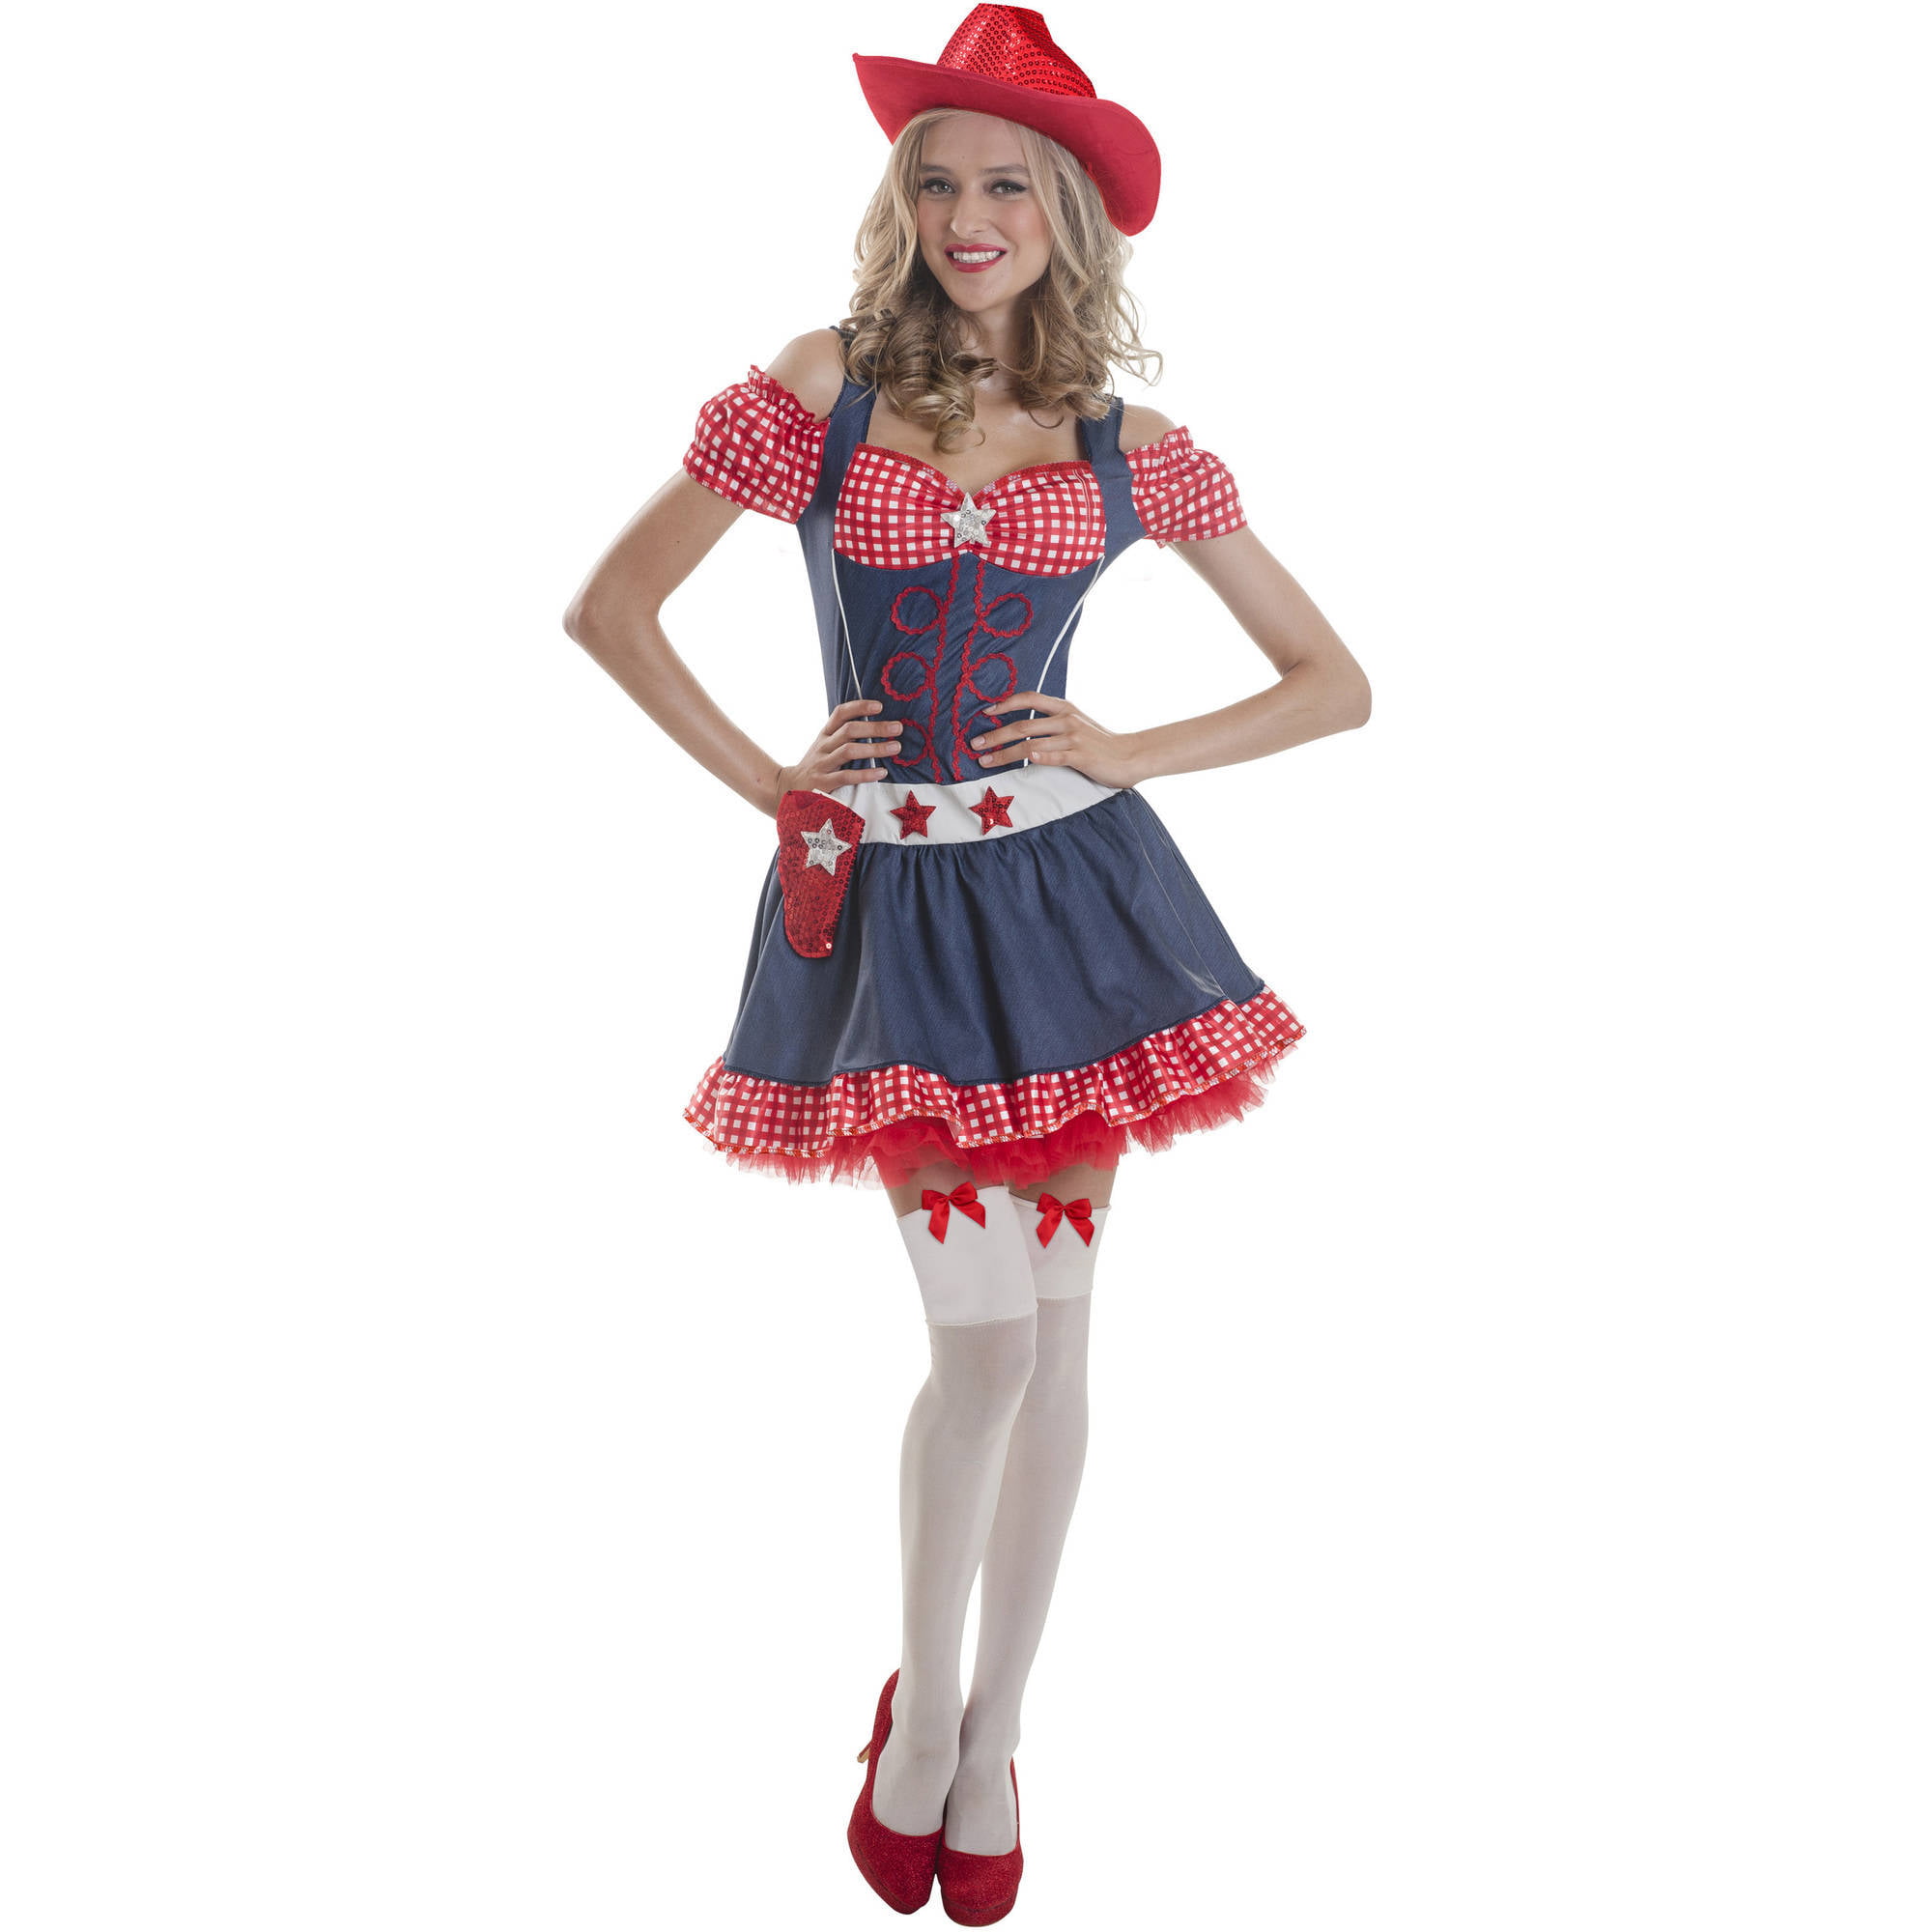 Miss Rodeo Adult Halloween  Costume  Walmart  com Walmart  com